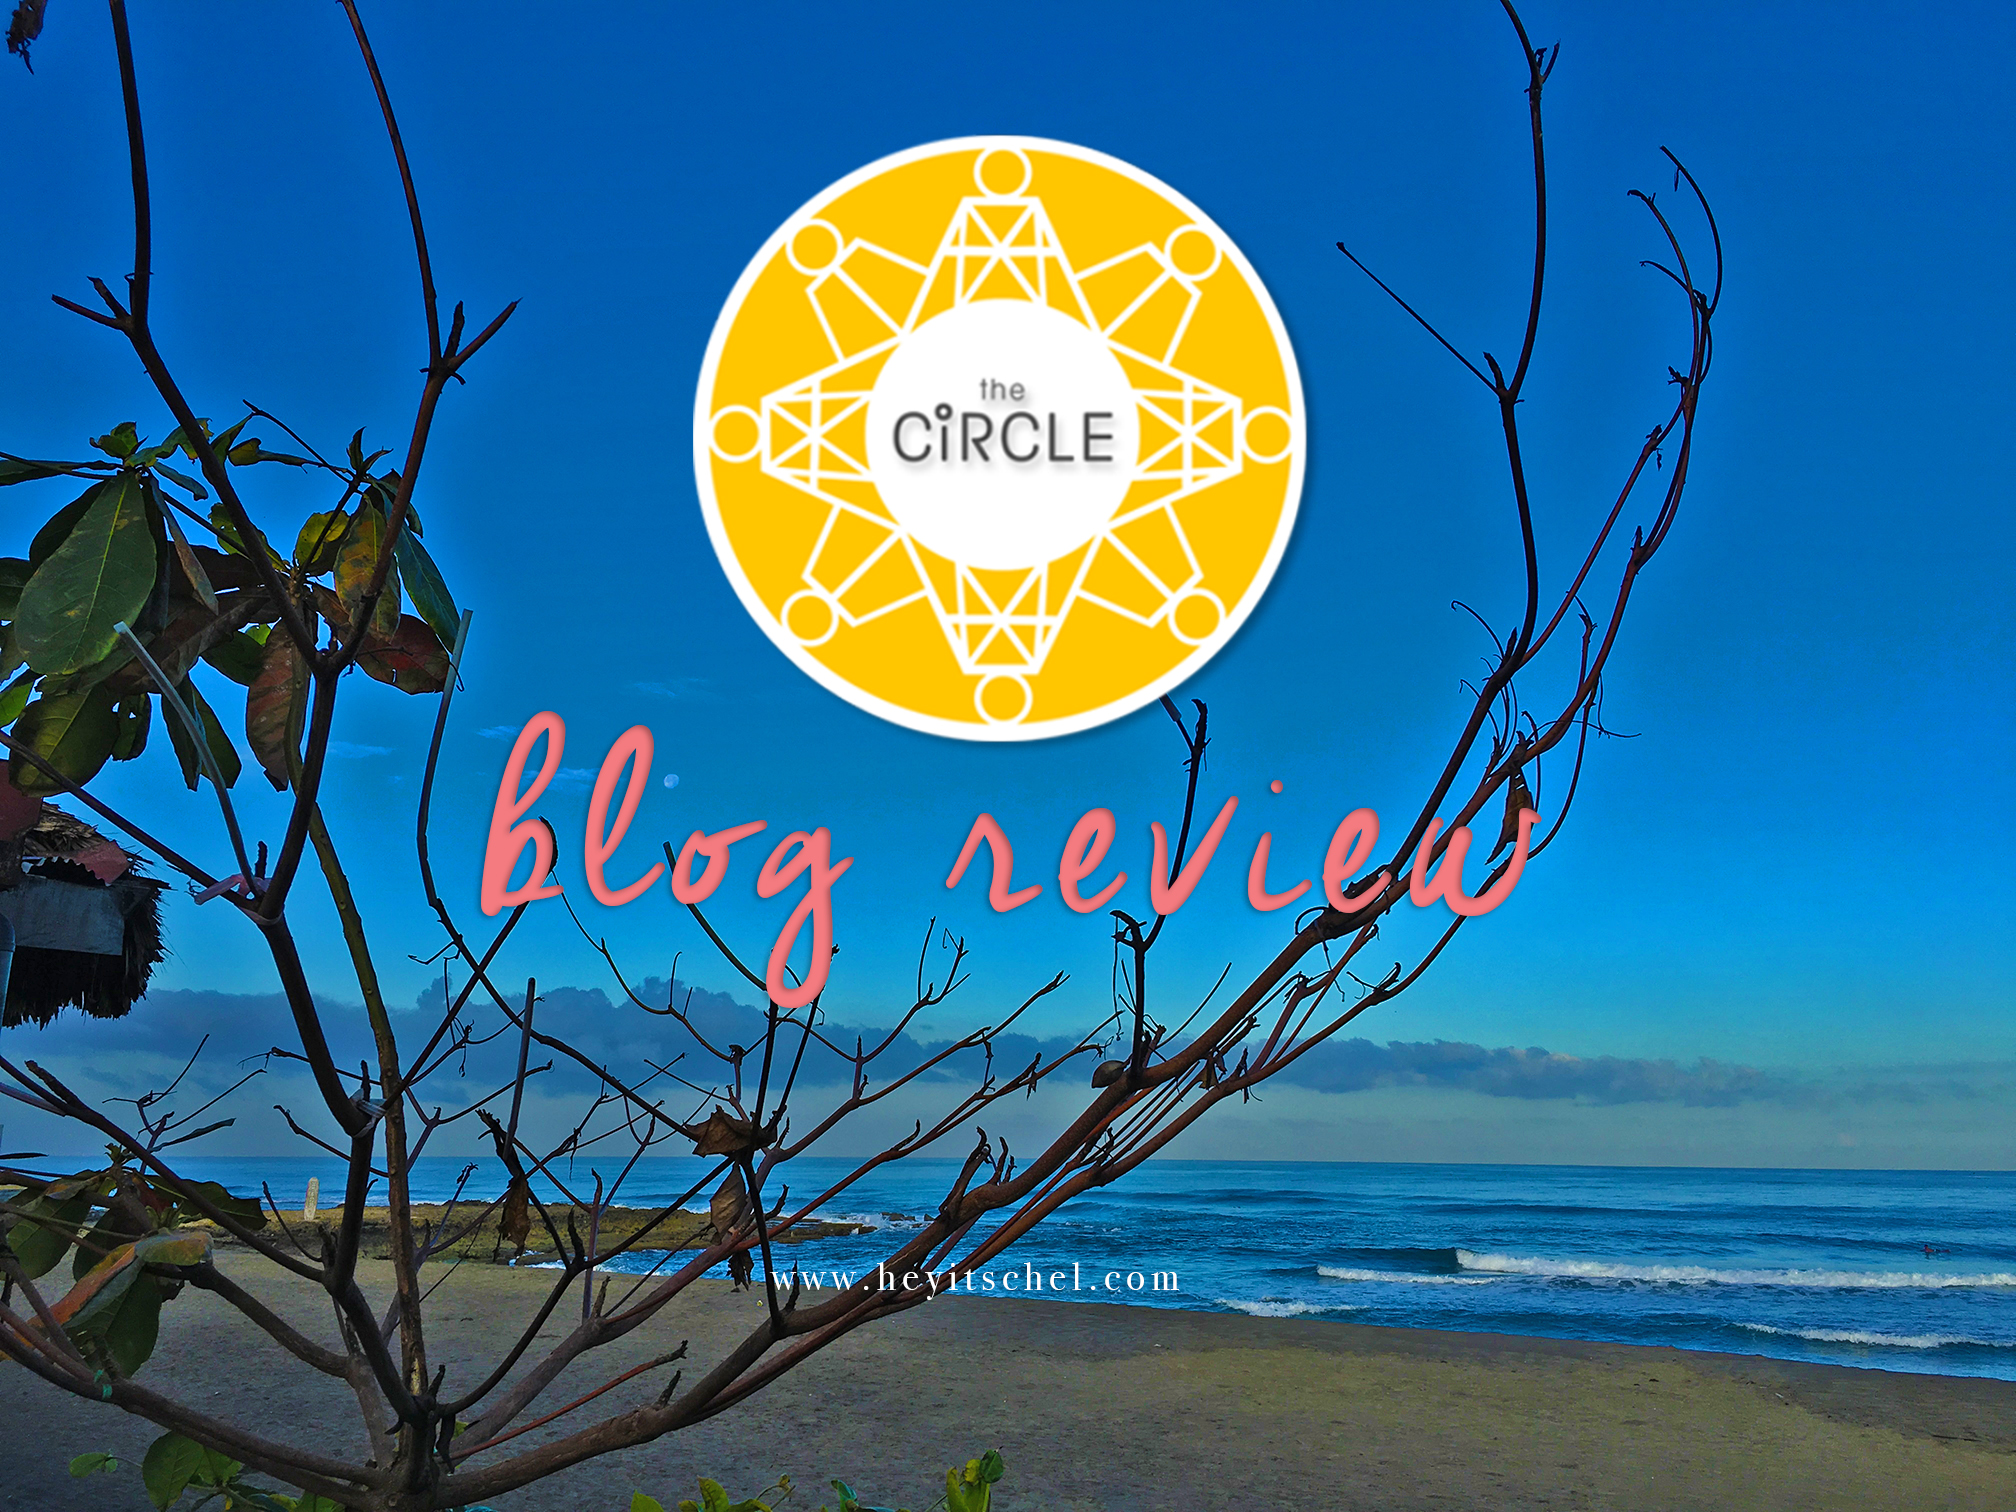 The Circle La Union blog review